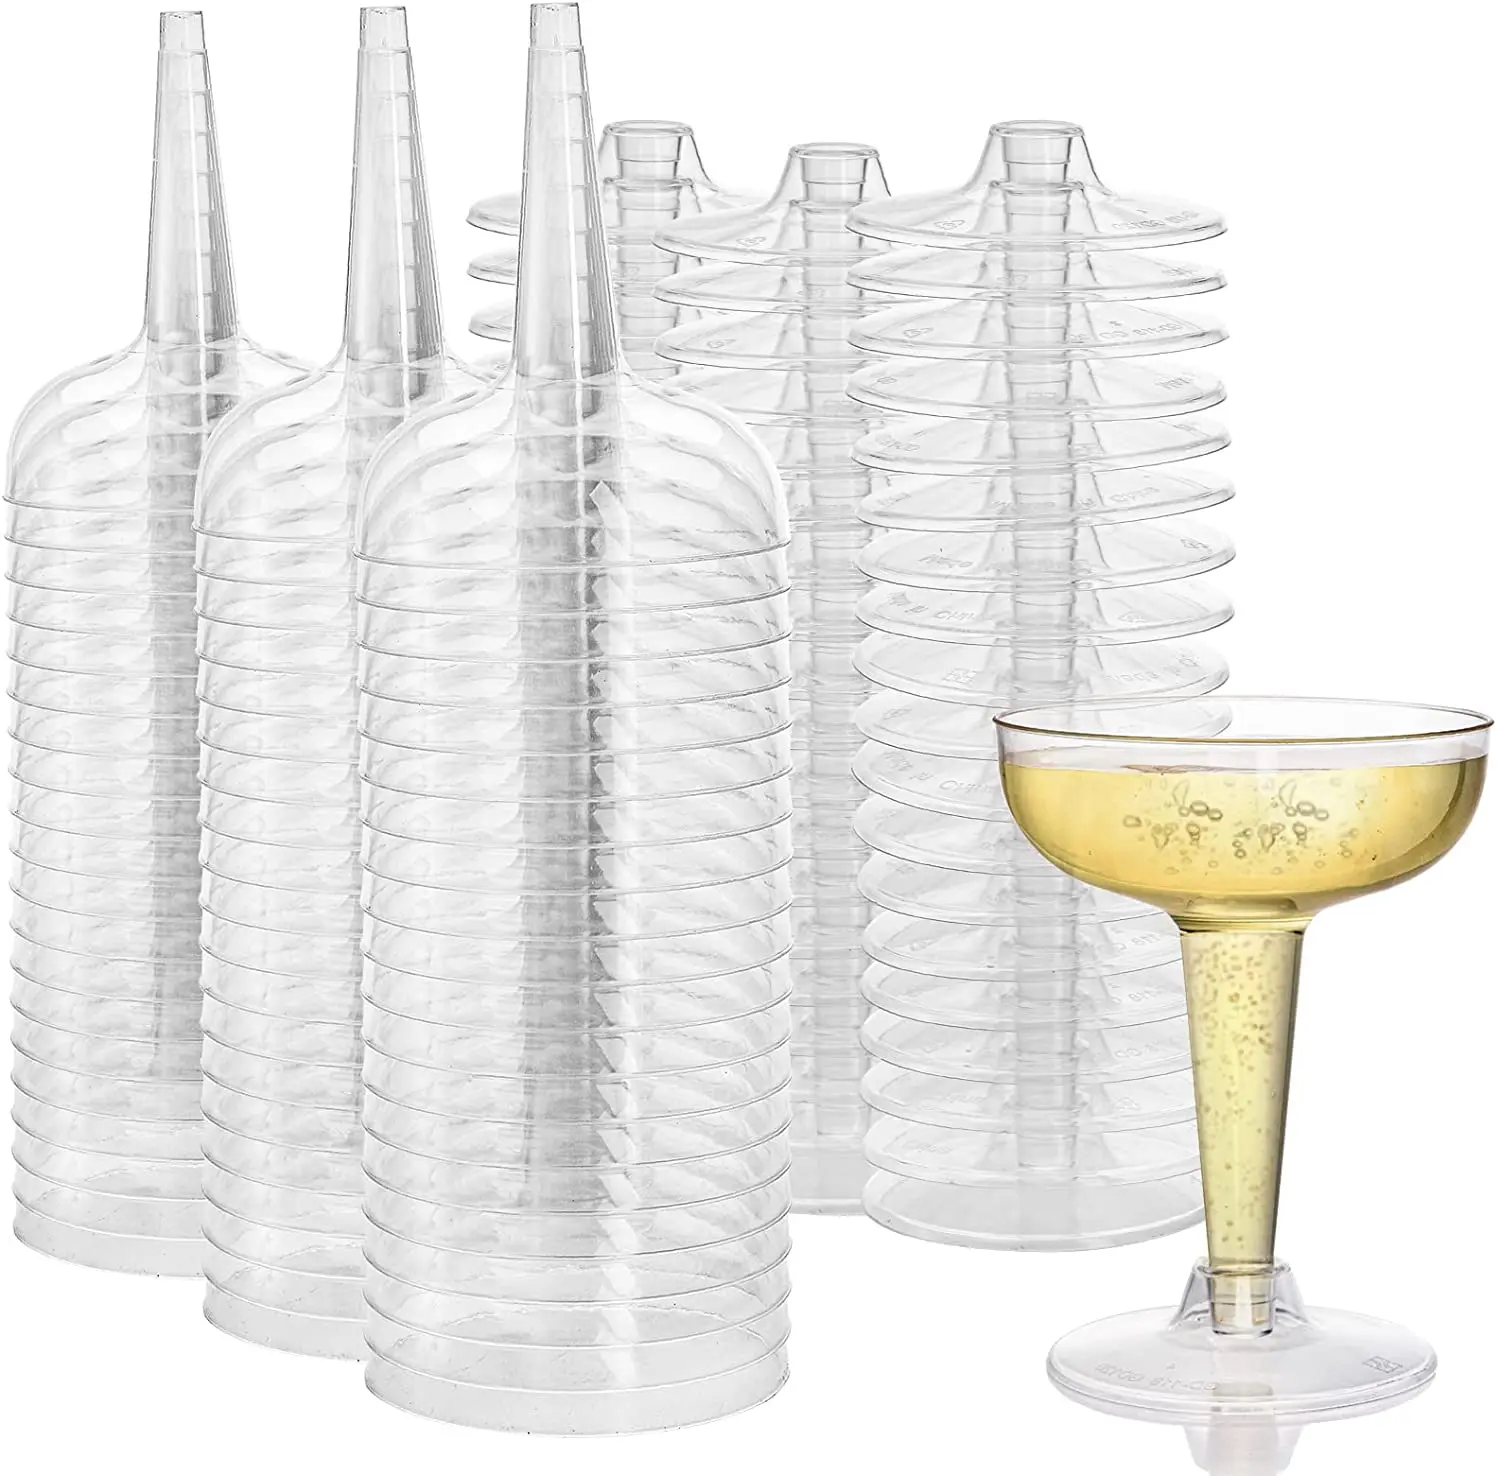 288 x Disposable Clear Plastic Martini Cocktail Champagne Wine Glasses 